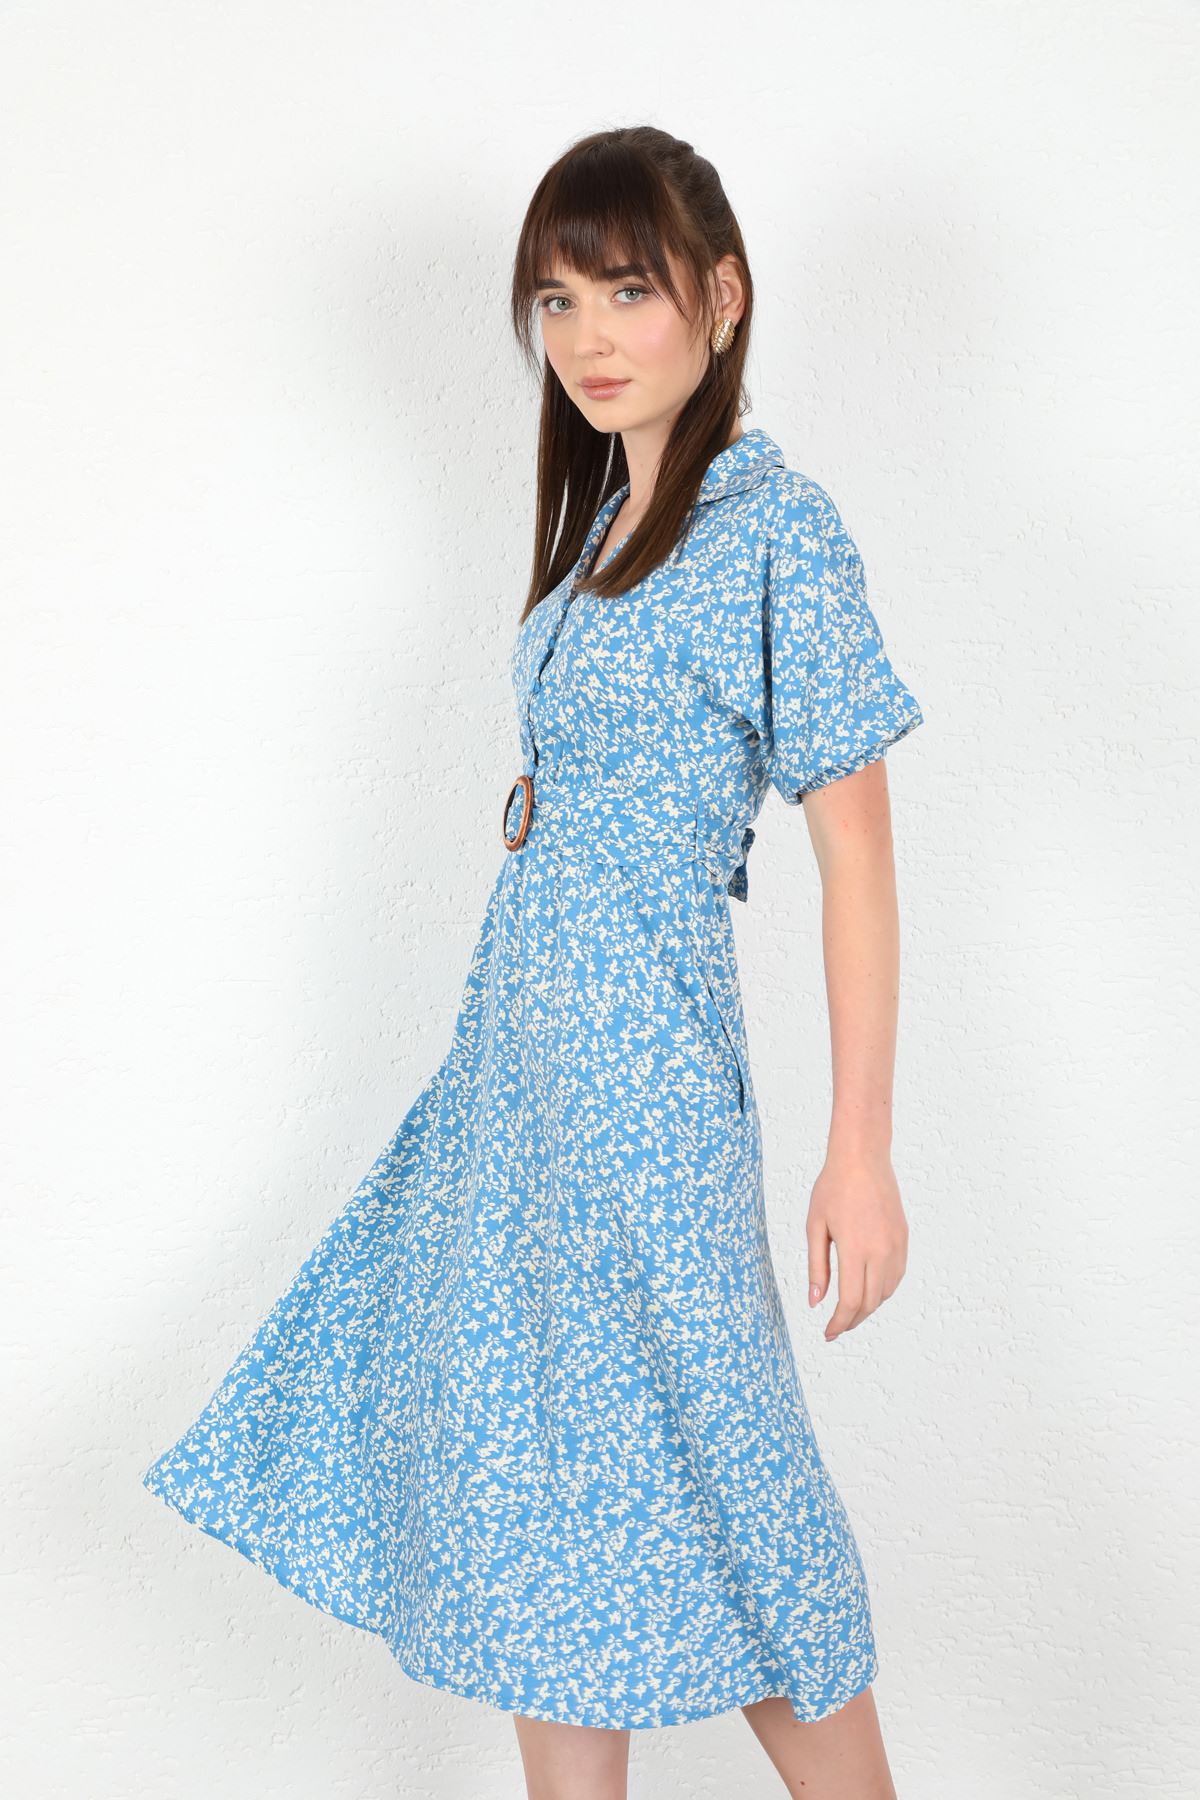 Viscose Fabric Crispy Print Women Dress With Belt - Blue